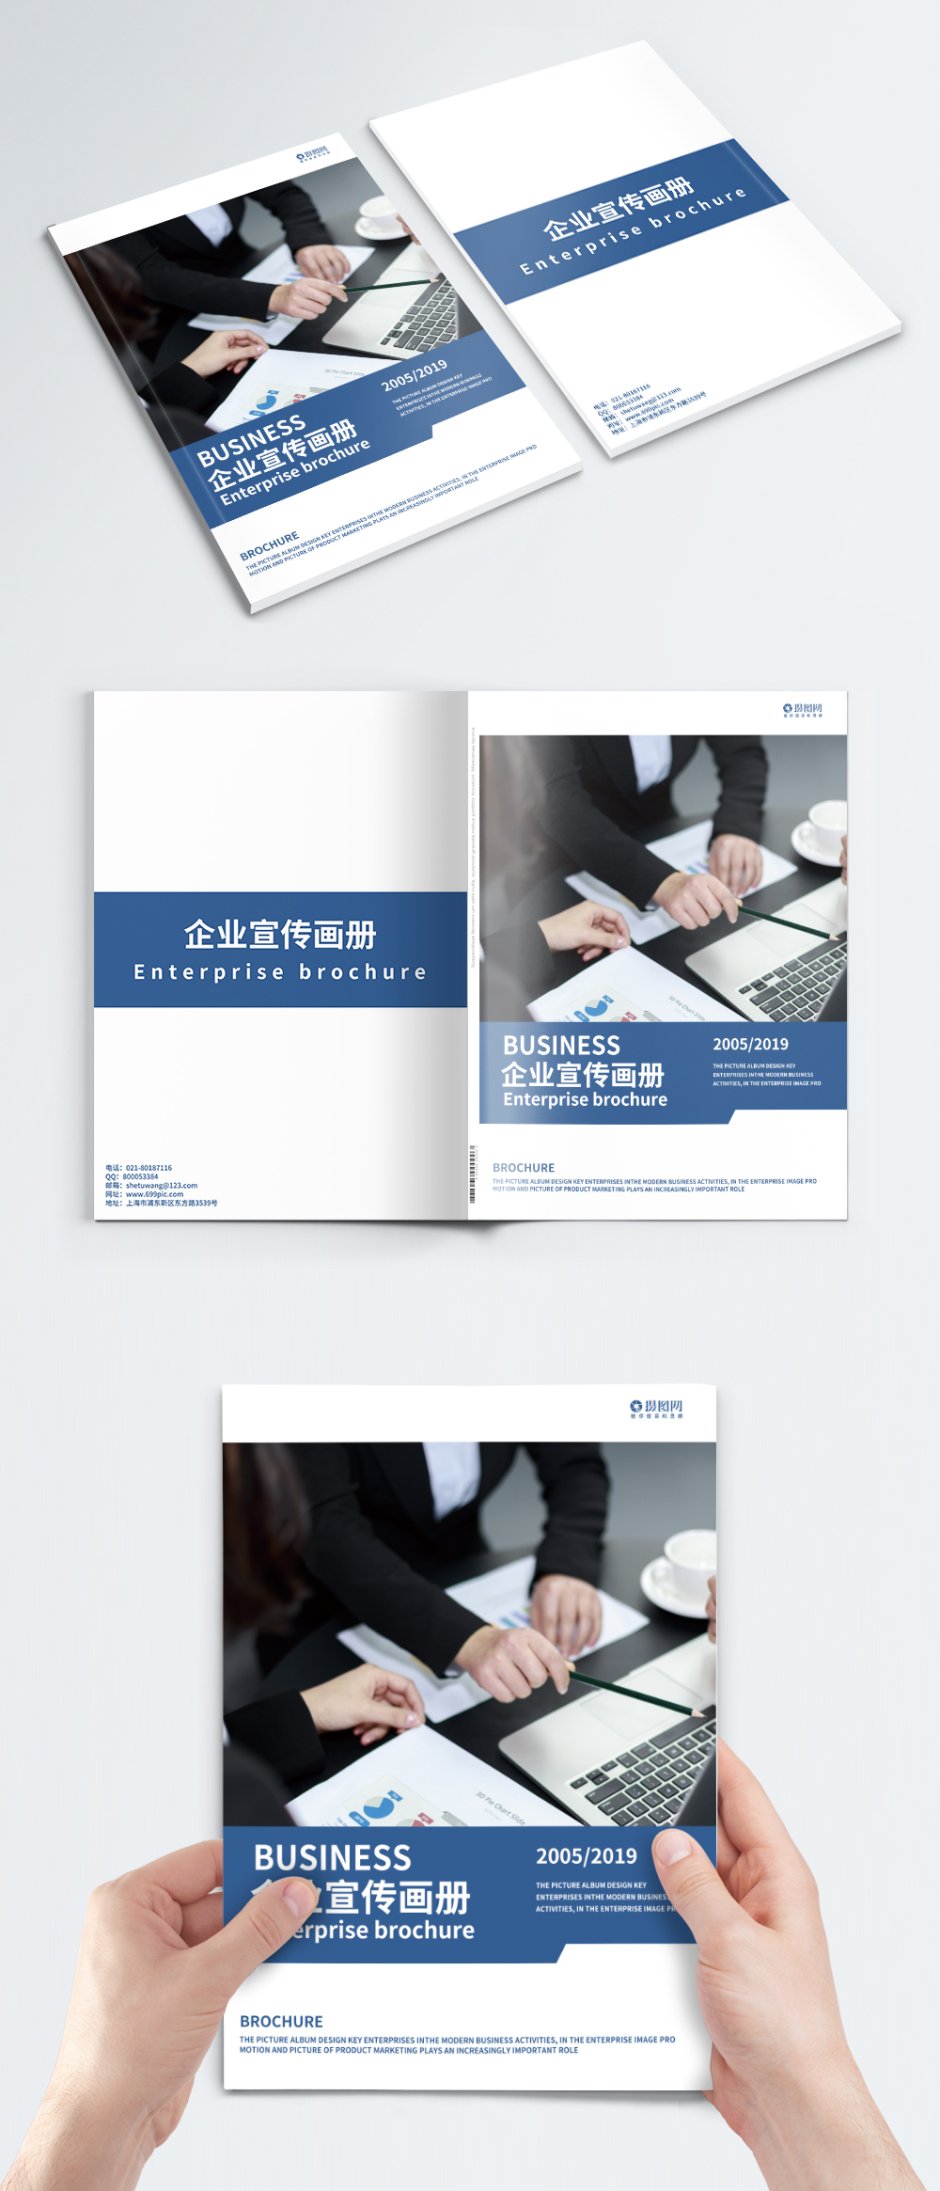 Enterprise brochure